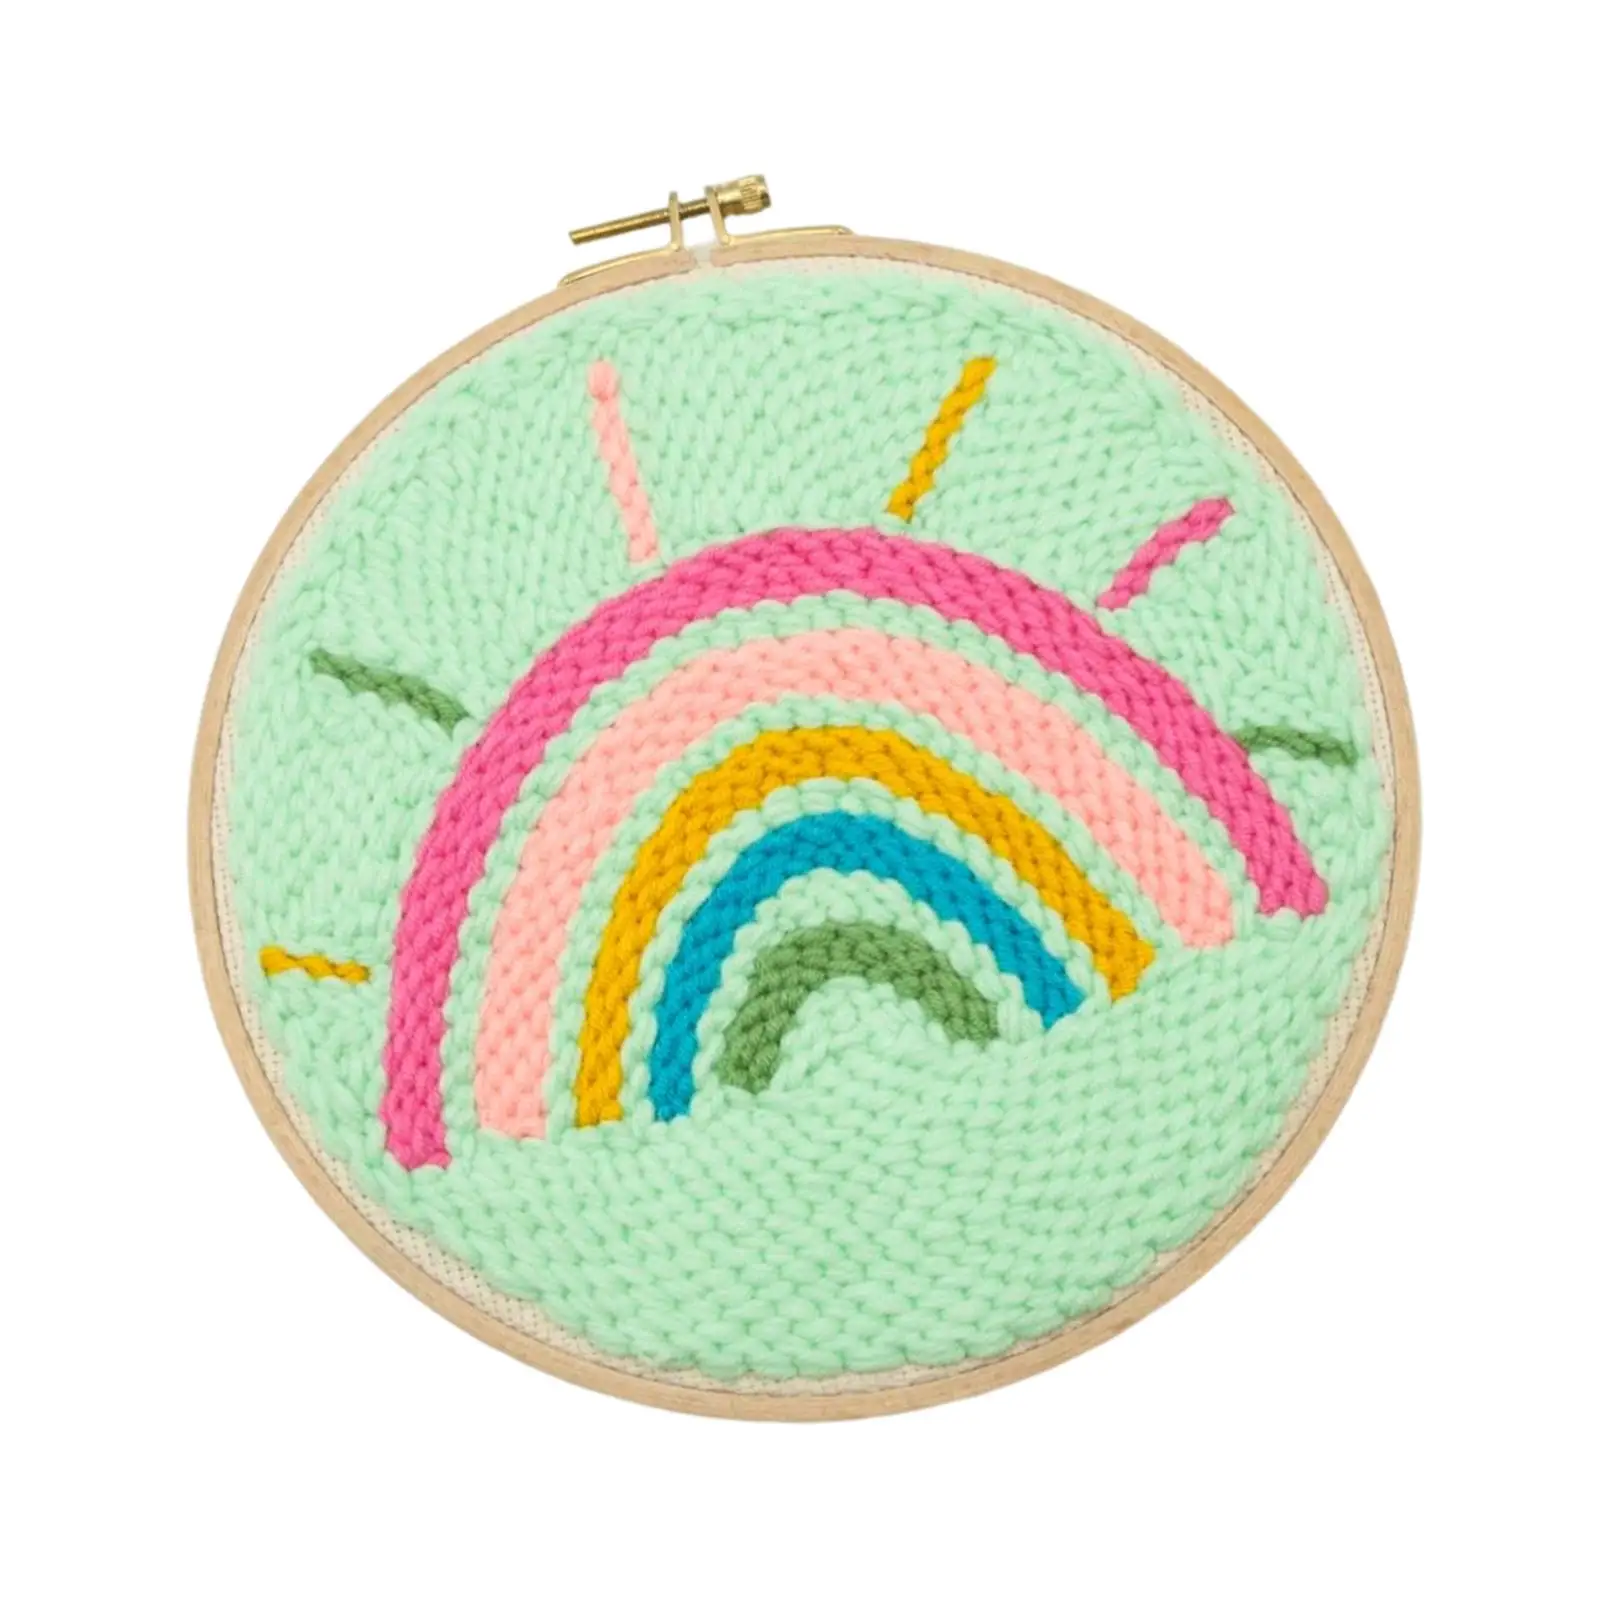 Punch Needle Embroidery Starter Kits Rainbow Punching Needle Hooking Kit Yarn Embroidery Hoop Pattern Basic Tools DIY Beginner